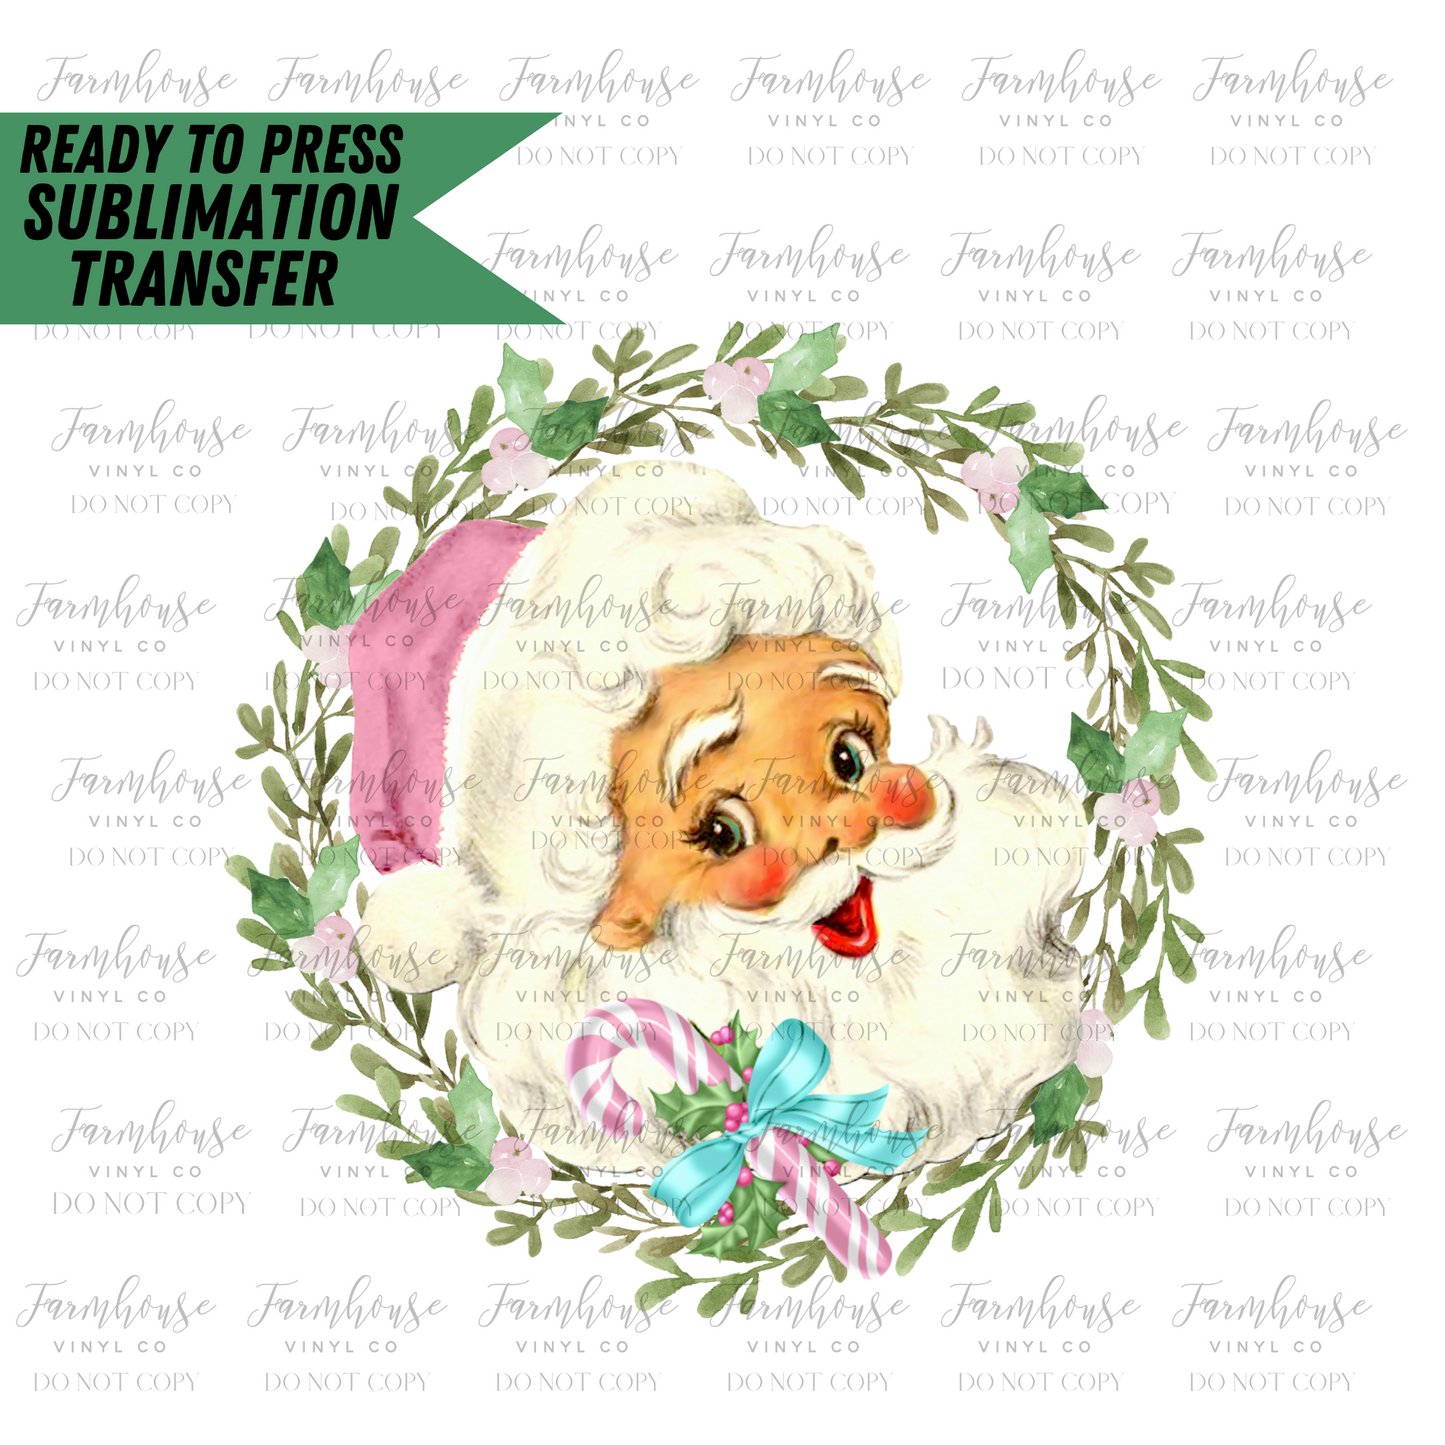 Vintage Pink Santa Claus Ready To Press Sublimation Transfer - Farmhouse Vinyl Co